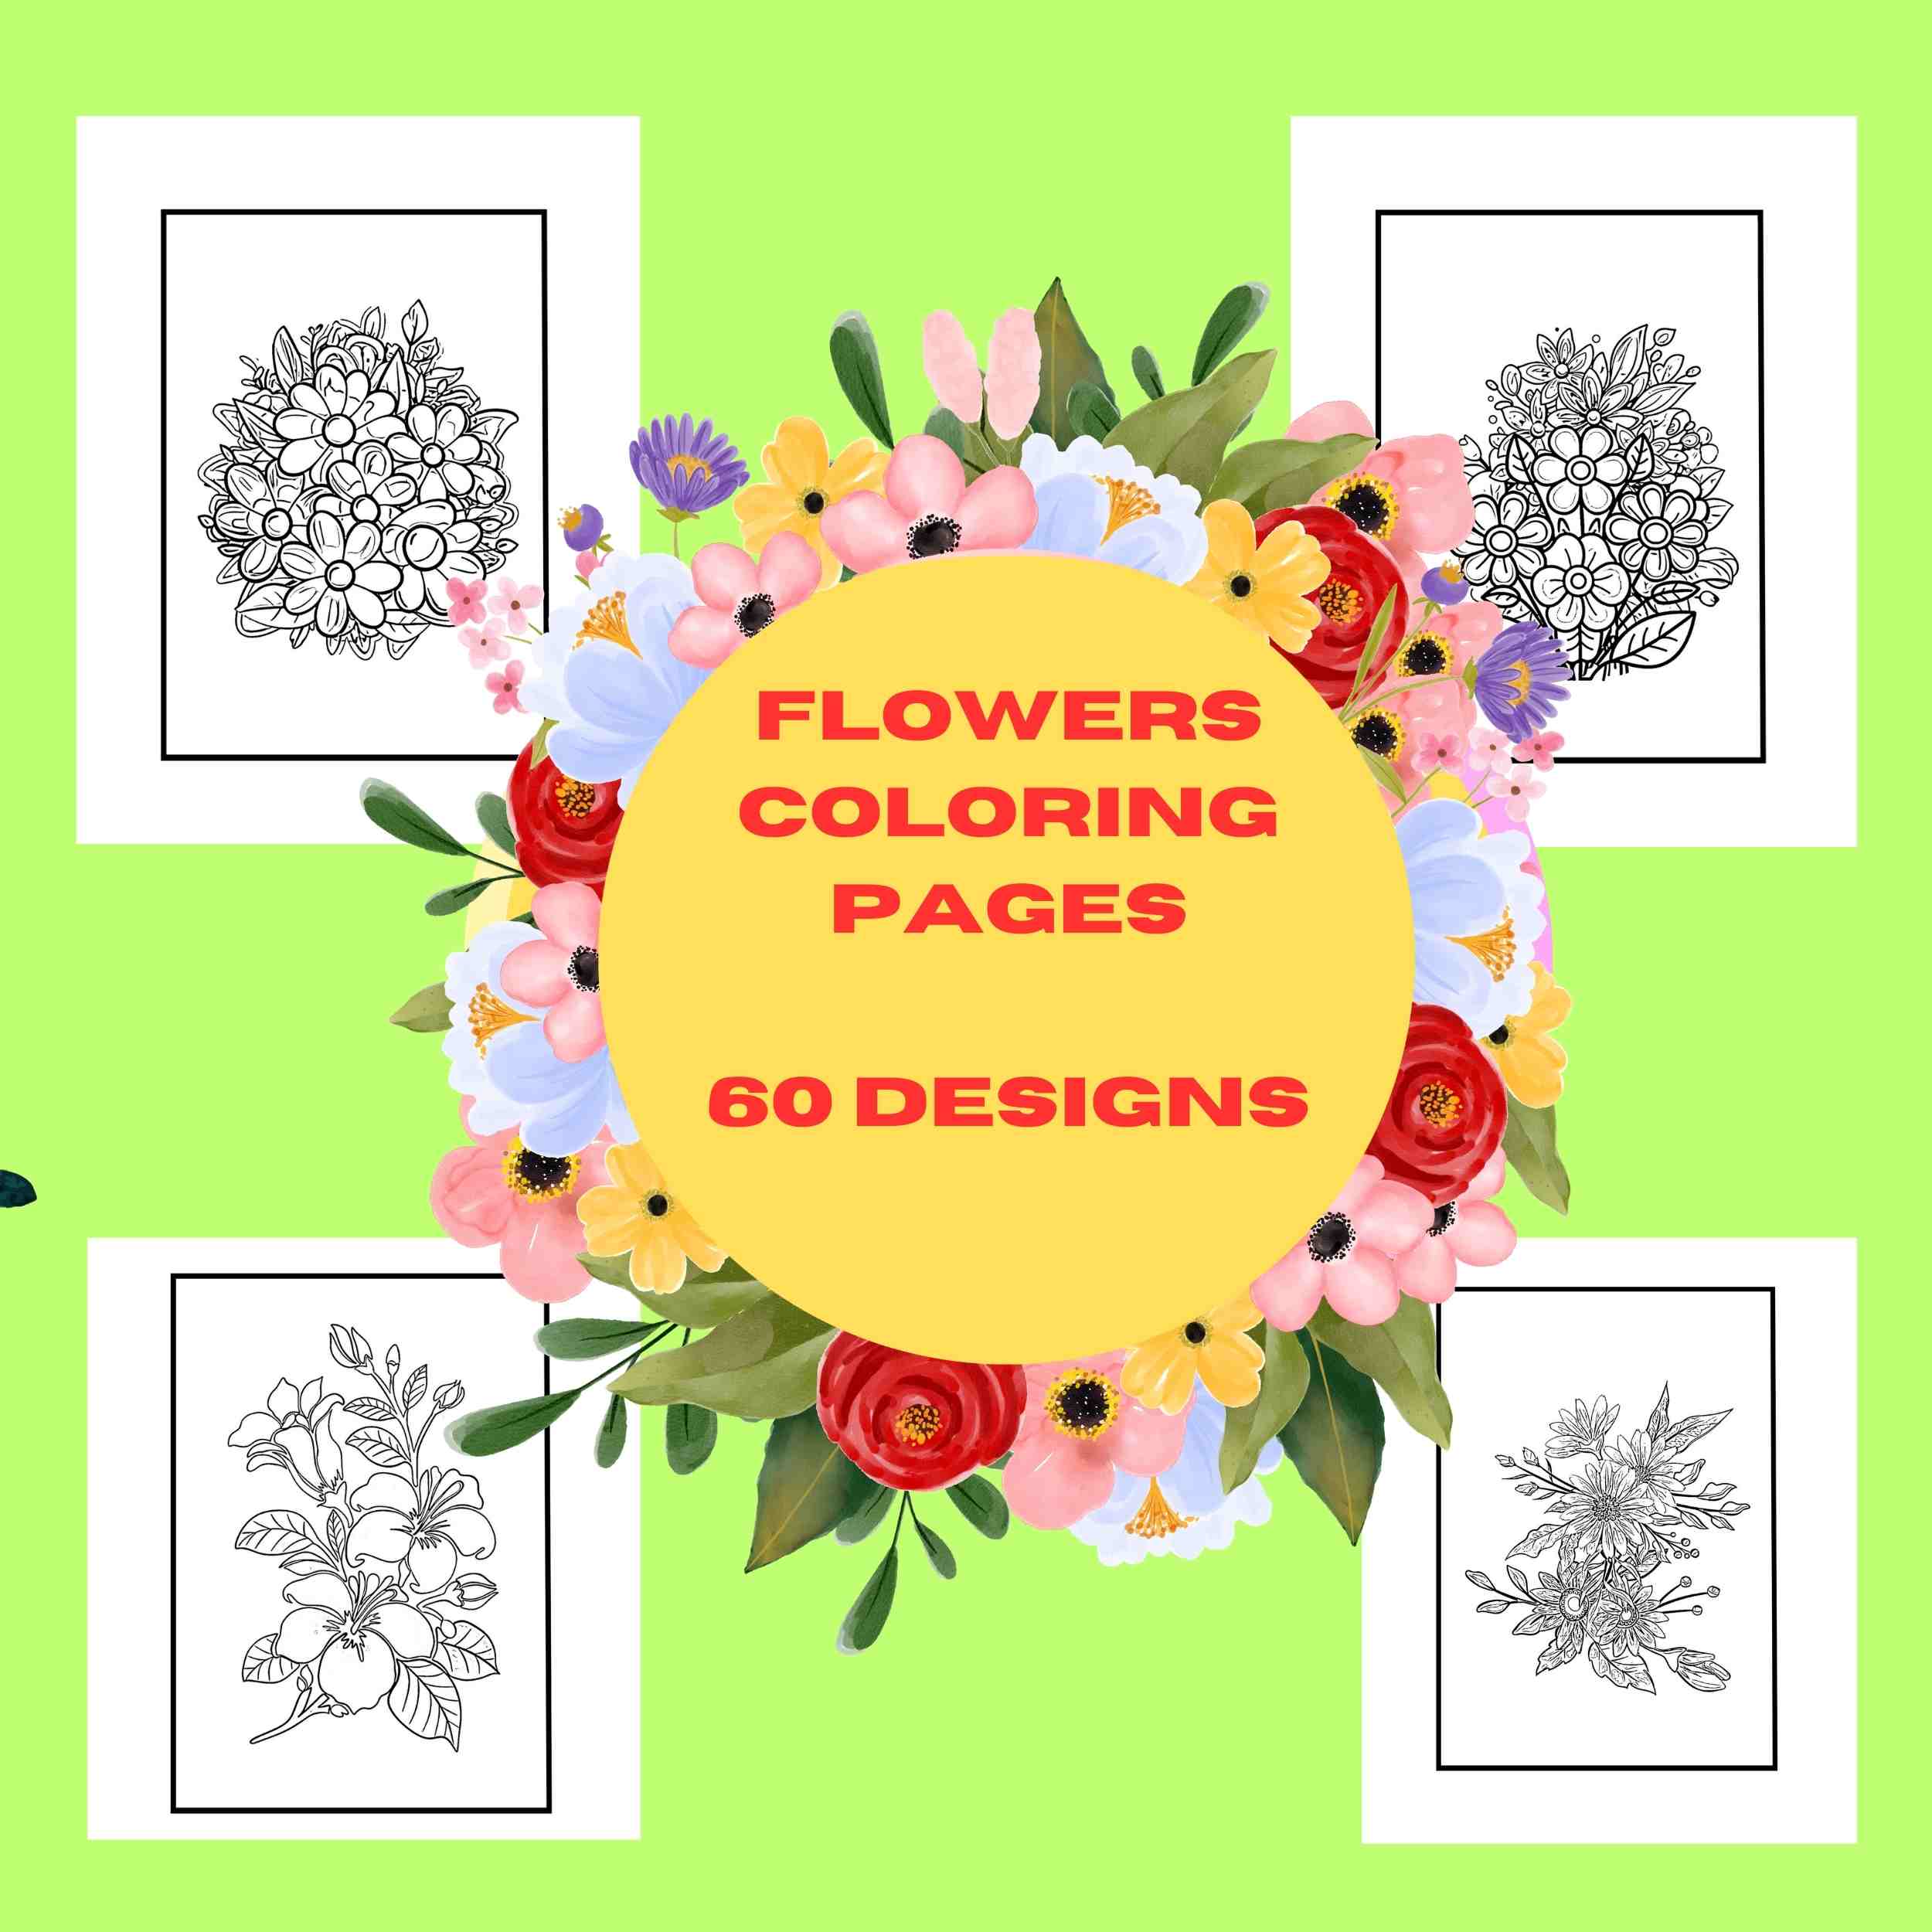 Flowers Coloring Pages Bundle – KDP cover image.